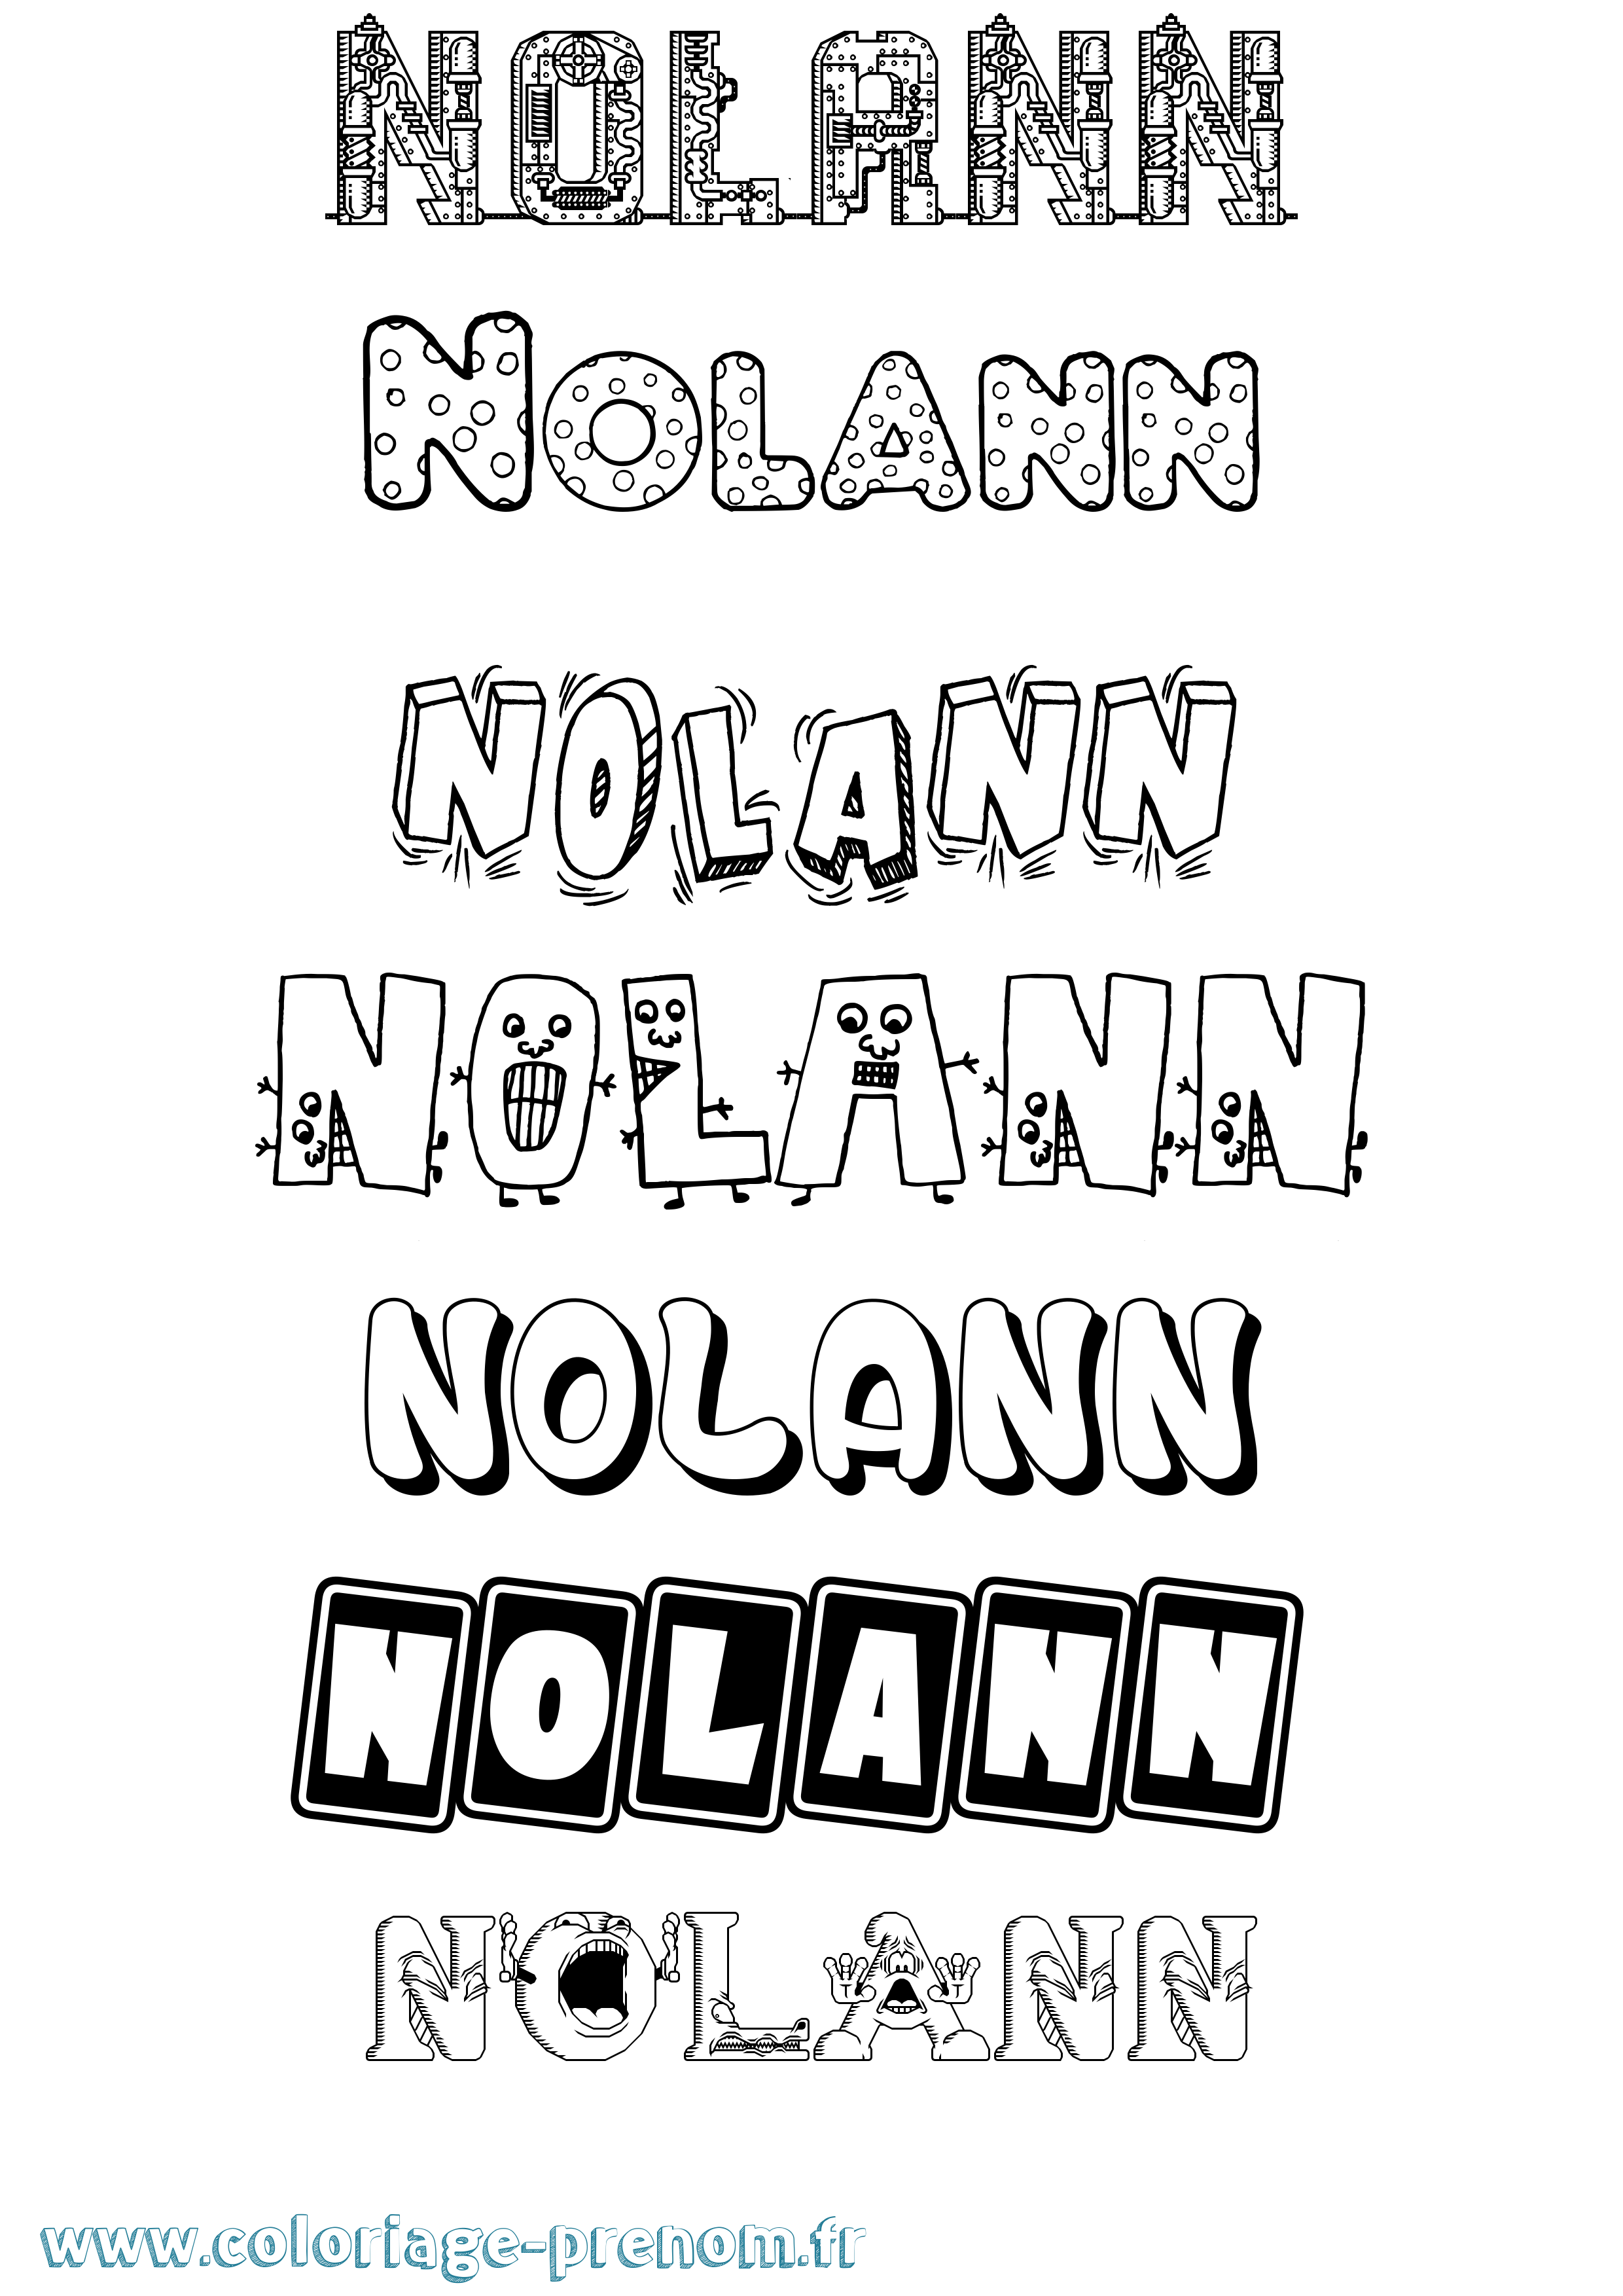 Coloriage prénom Nolann Fun